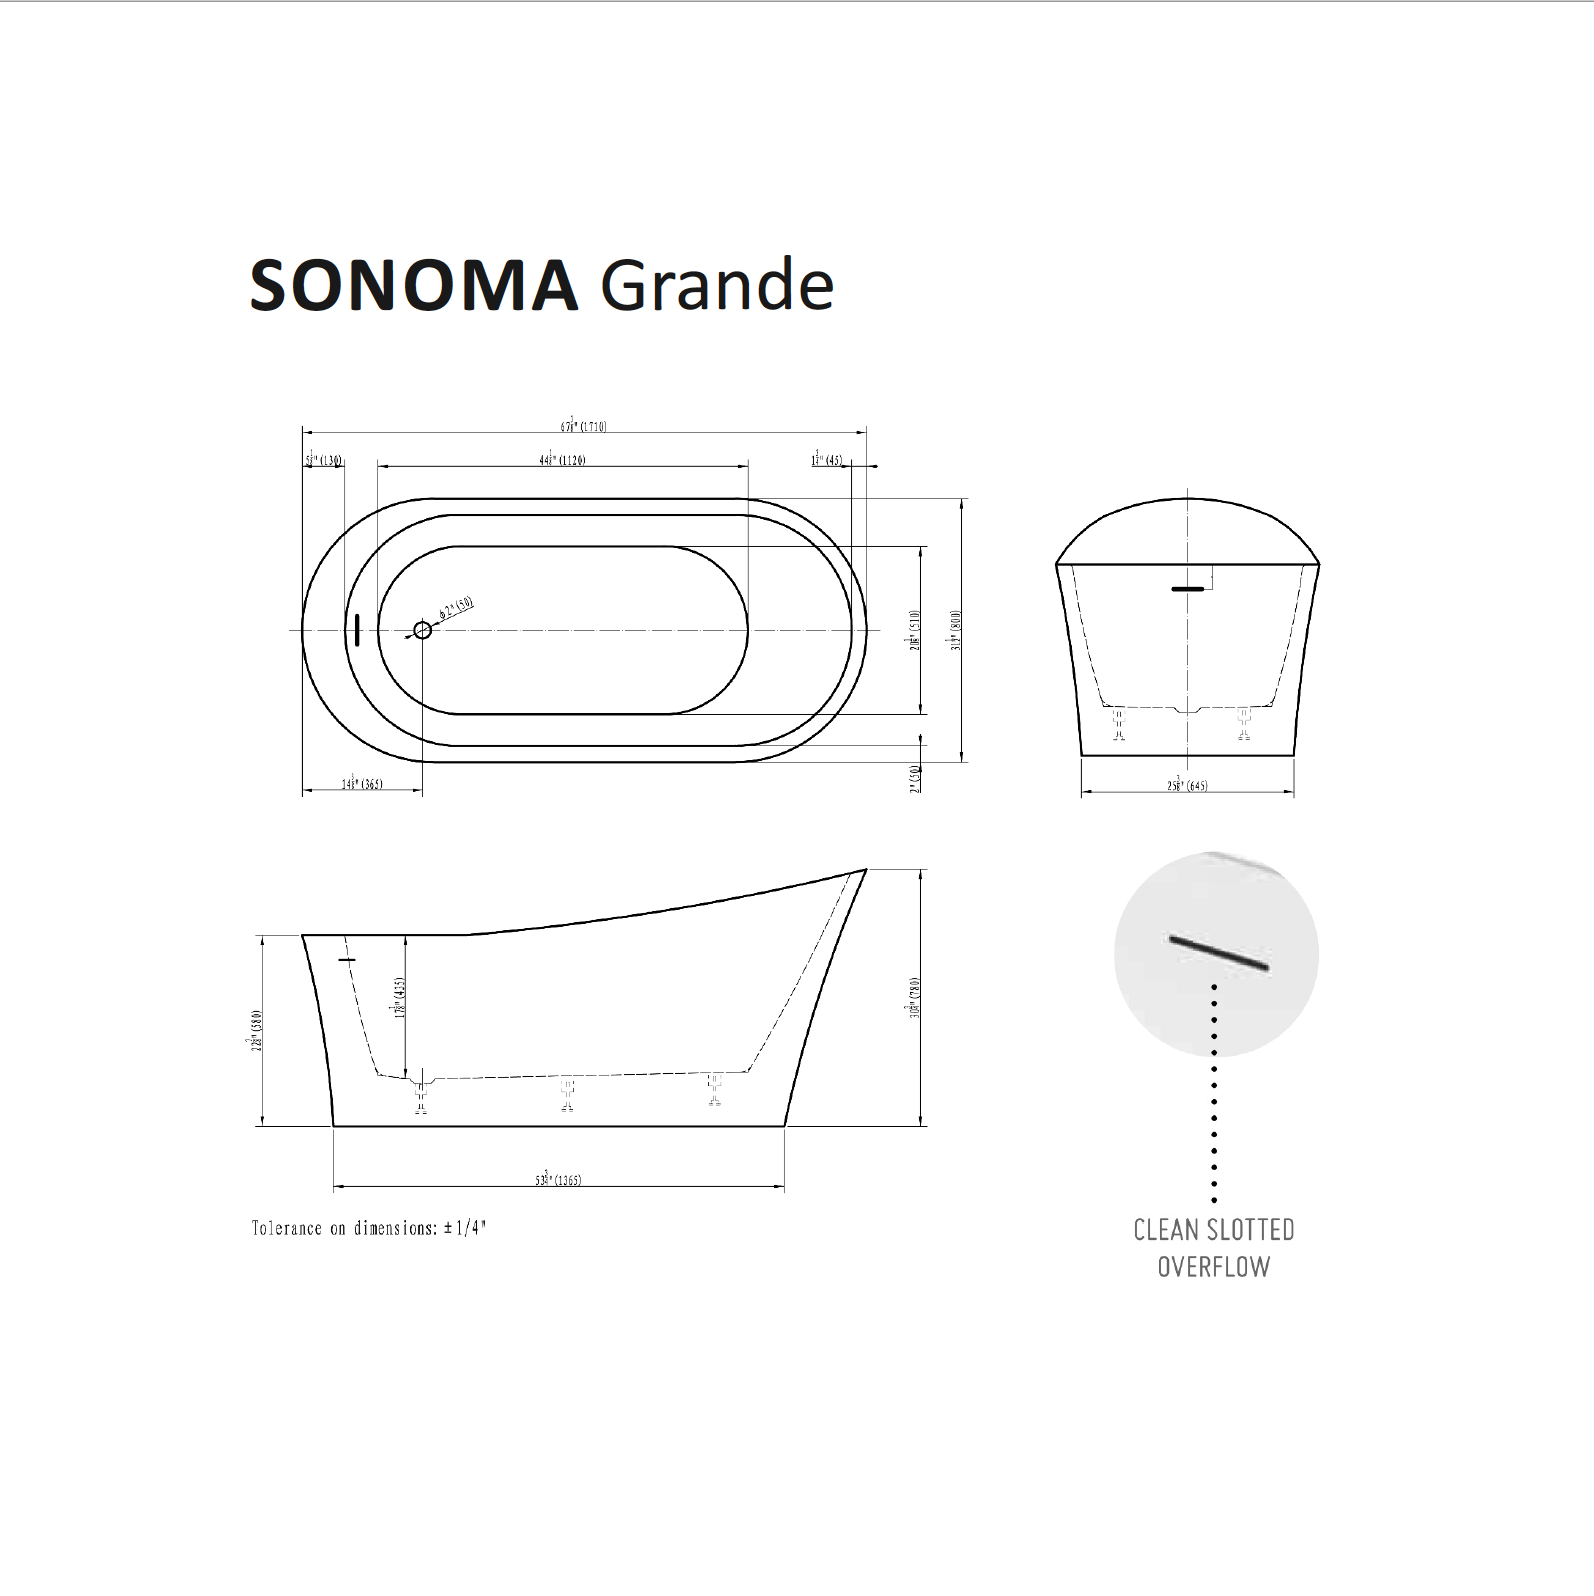 Sonoma Grande Tub Specifications